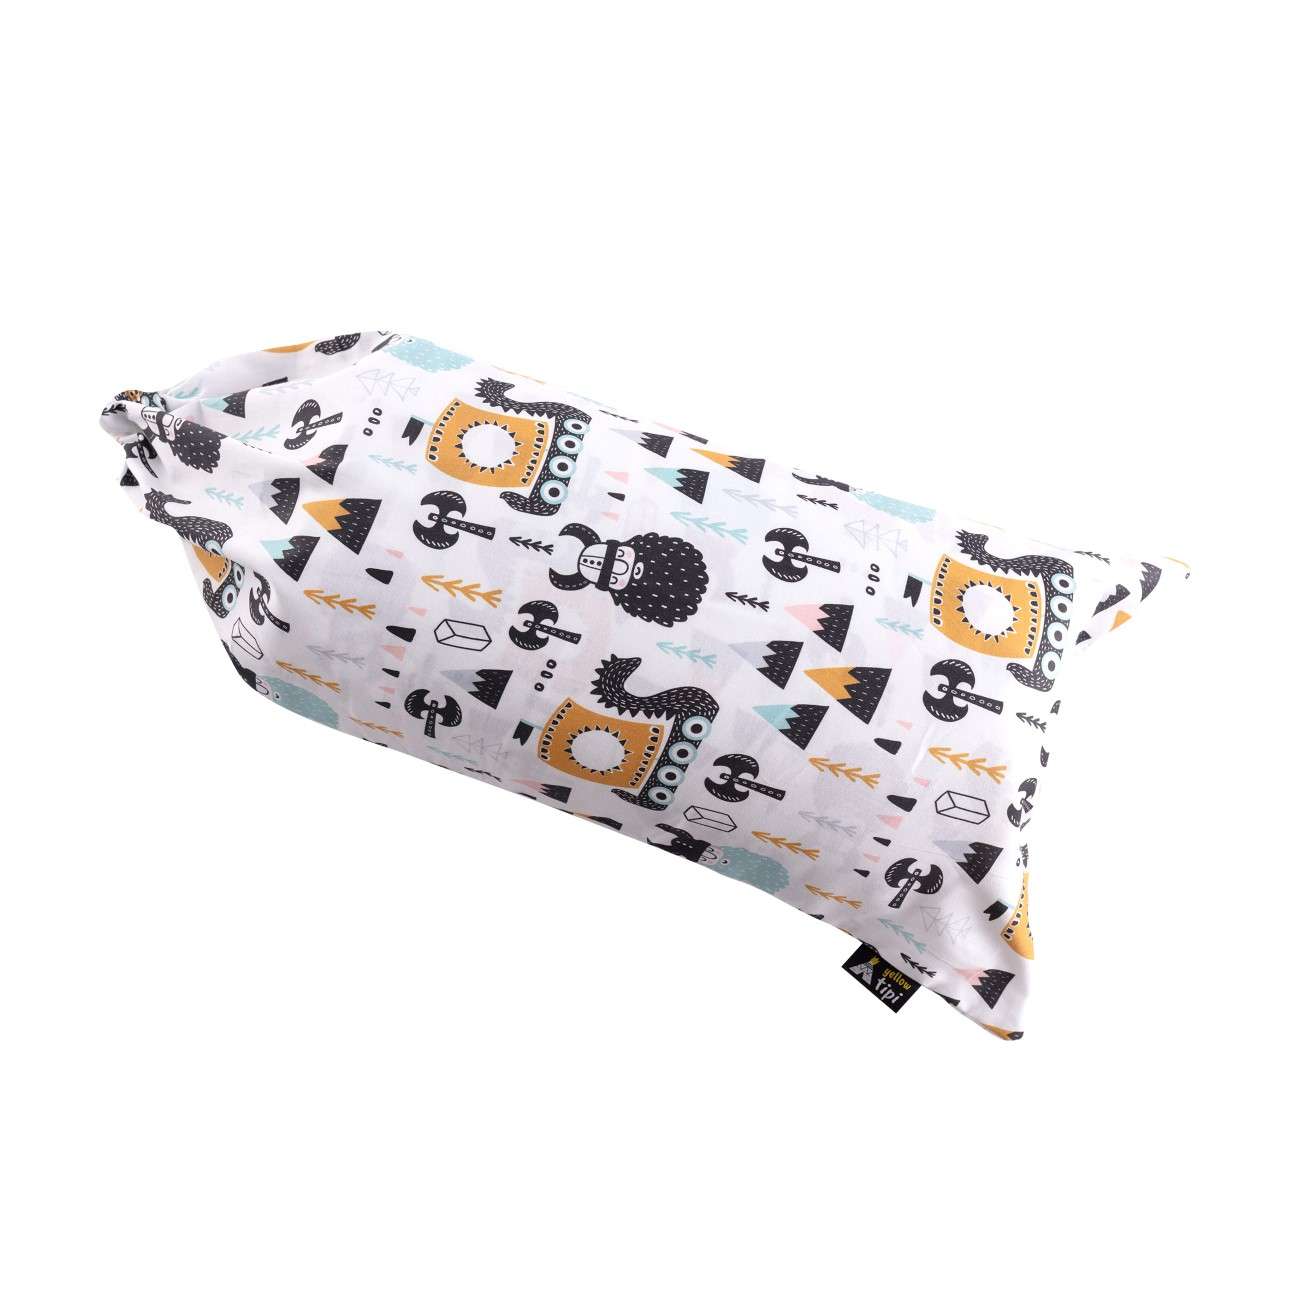 Toddler sleeping bag Vikings - 65 x 100 - multicolour